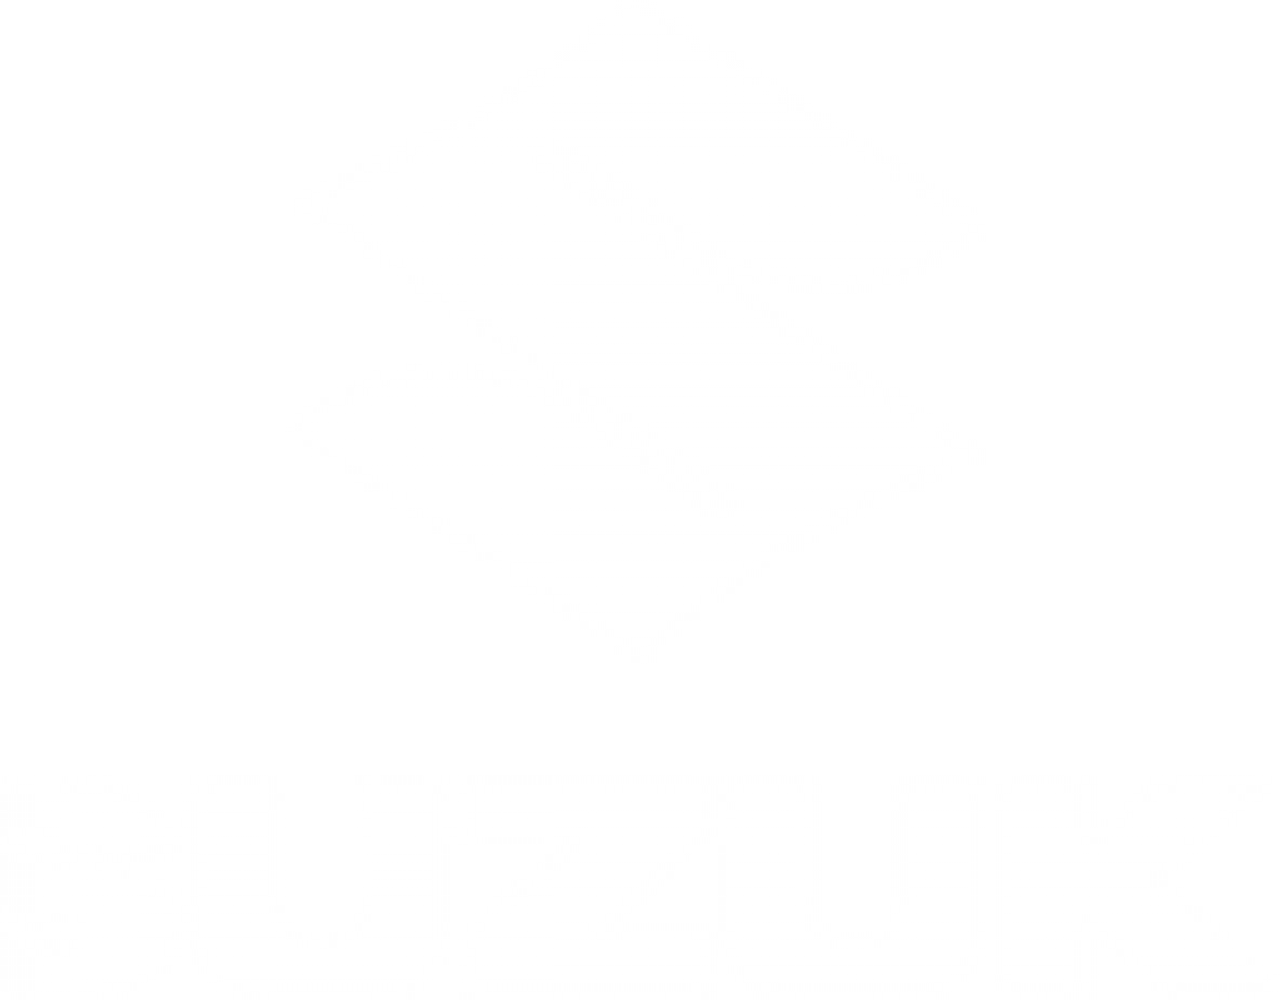 Download Suzuki White Logo   Suzuki Logo On Black   Full Size Png Pluspng.com  - Suzuki, Transparent background PNG HD thumbnail